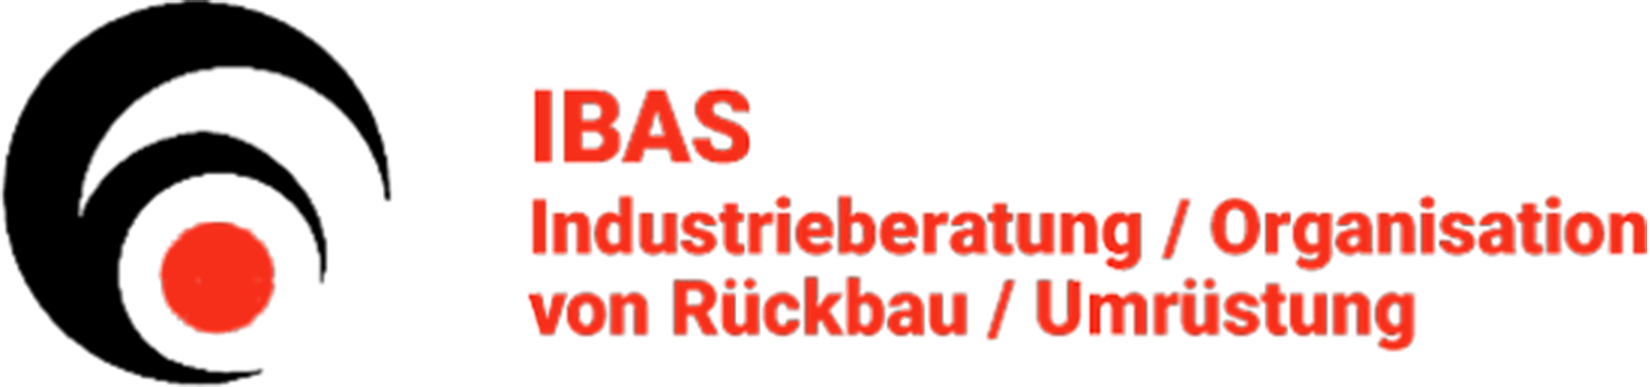 IBAS Andreas Schulz - Industrieberatung - Industrieservice